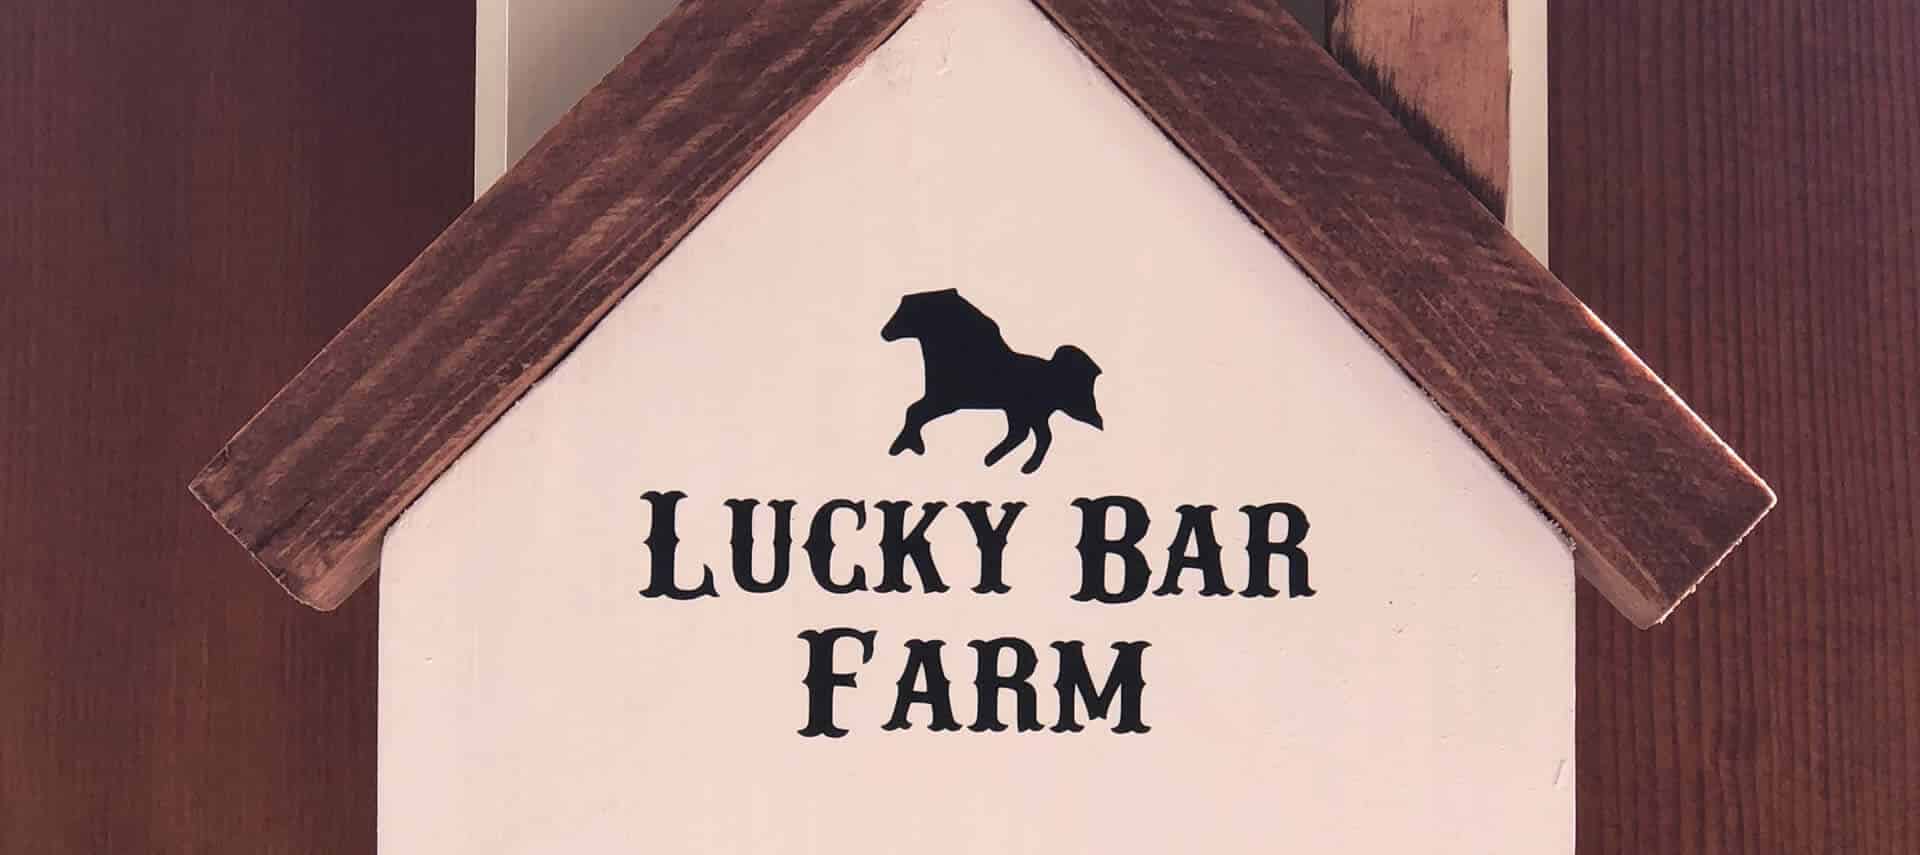 Lucky Bar Farm logo - brown and cream with a black horse outline